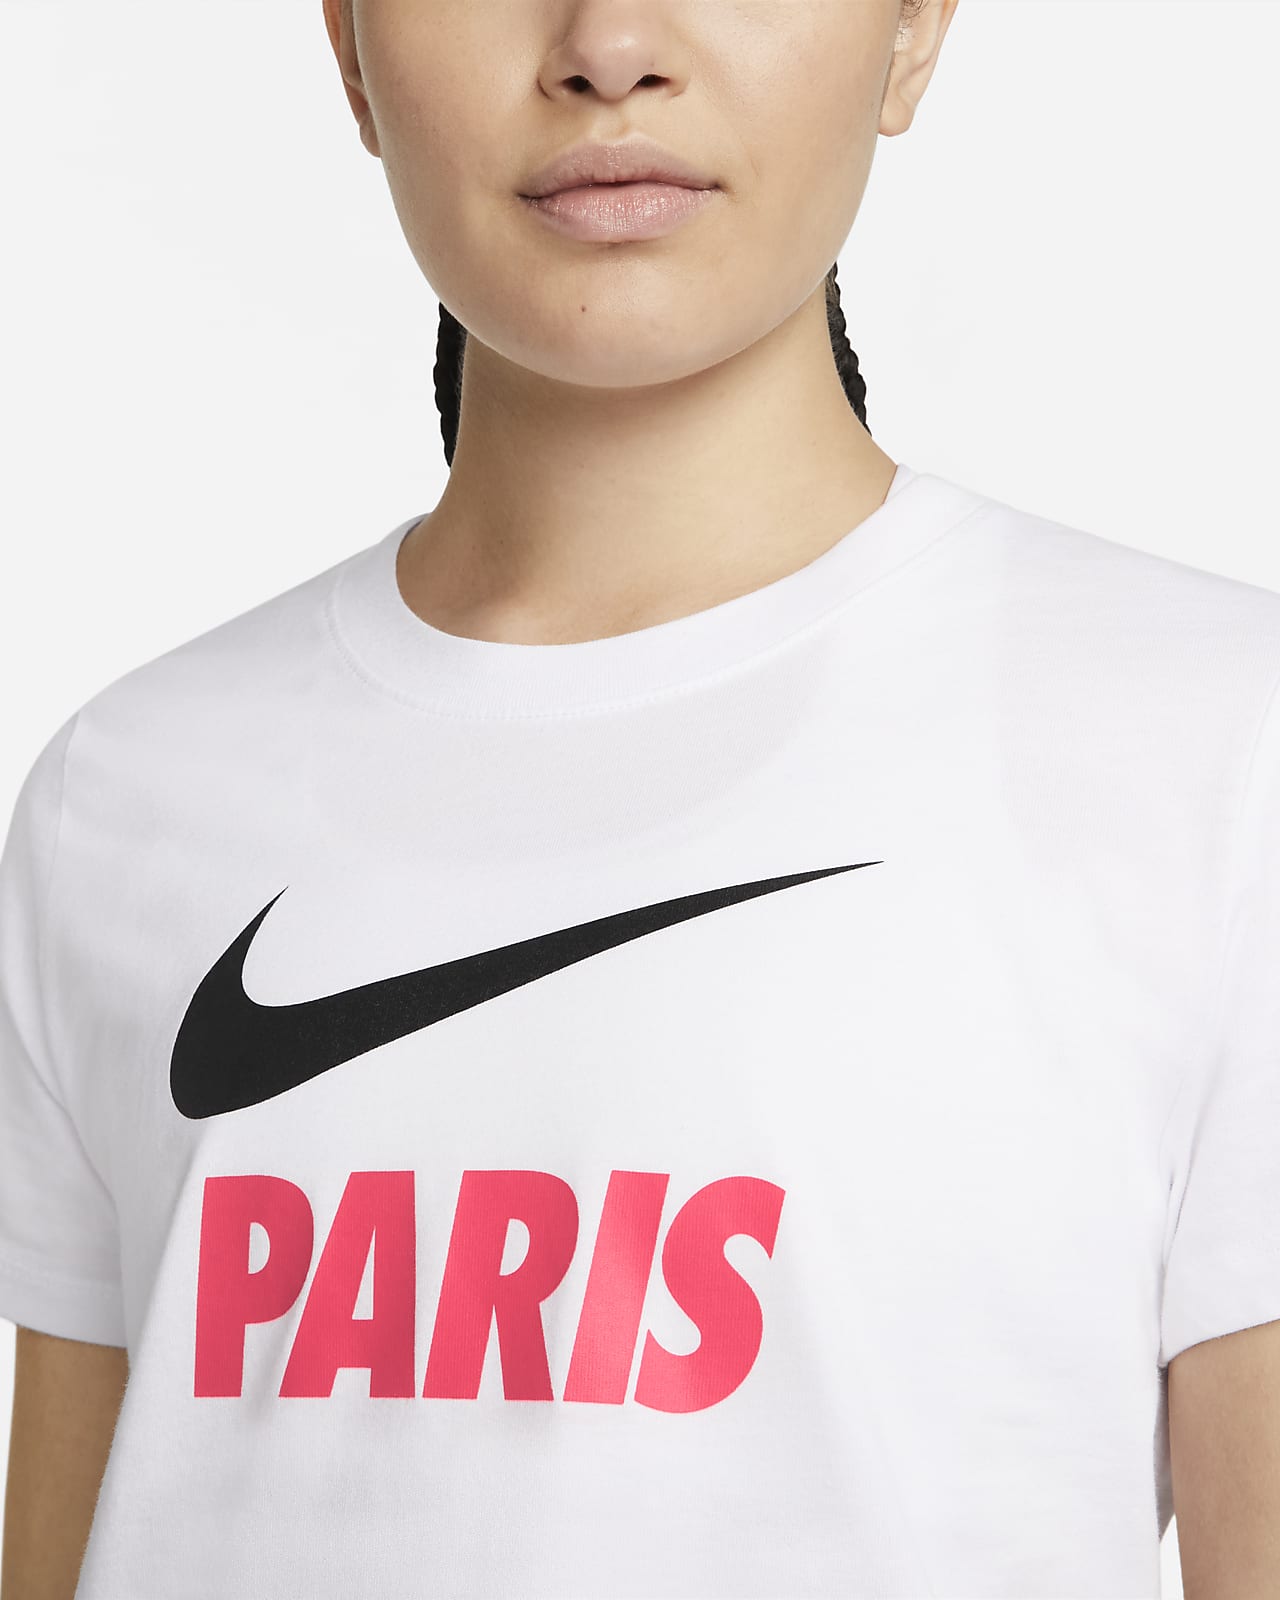 Найк Парис. Paris Nike футболка женская. Футболка Париж найк Буда. Найк париж